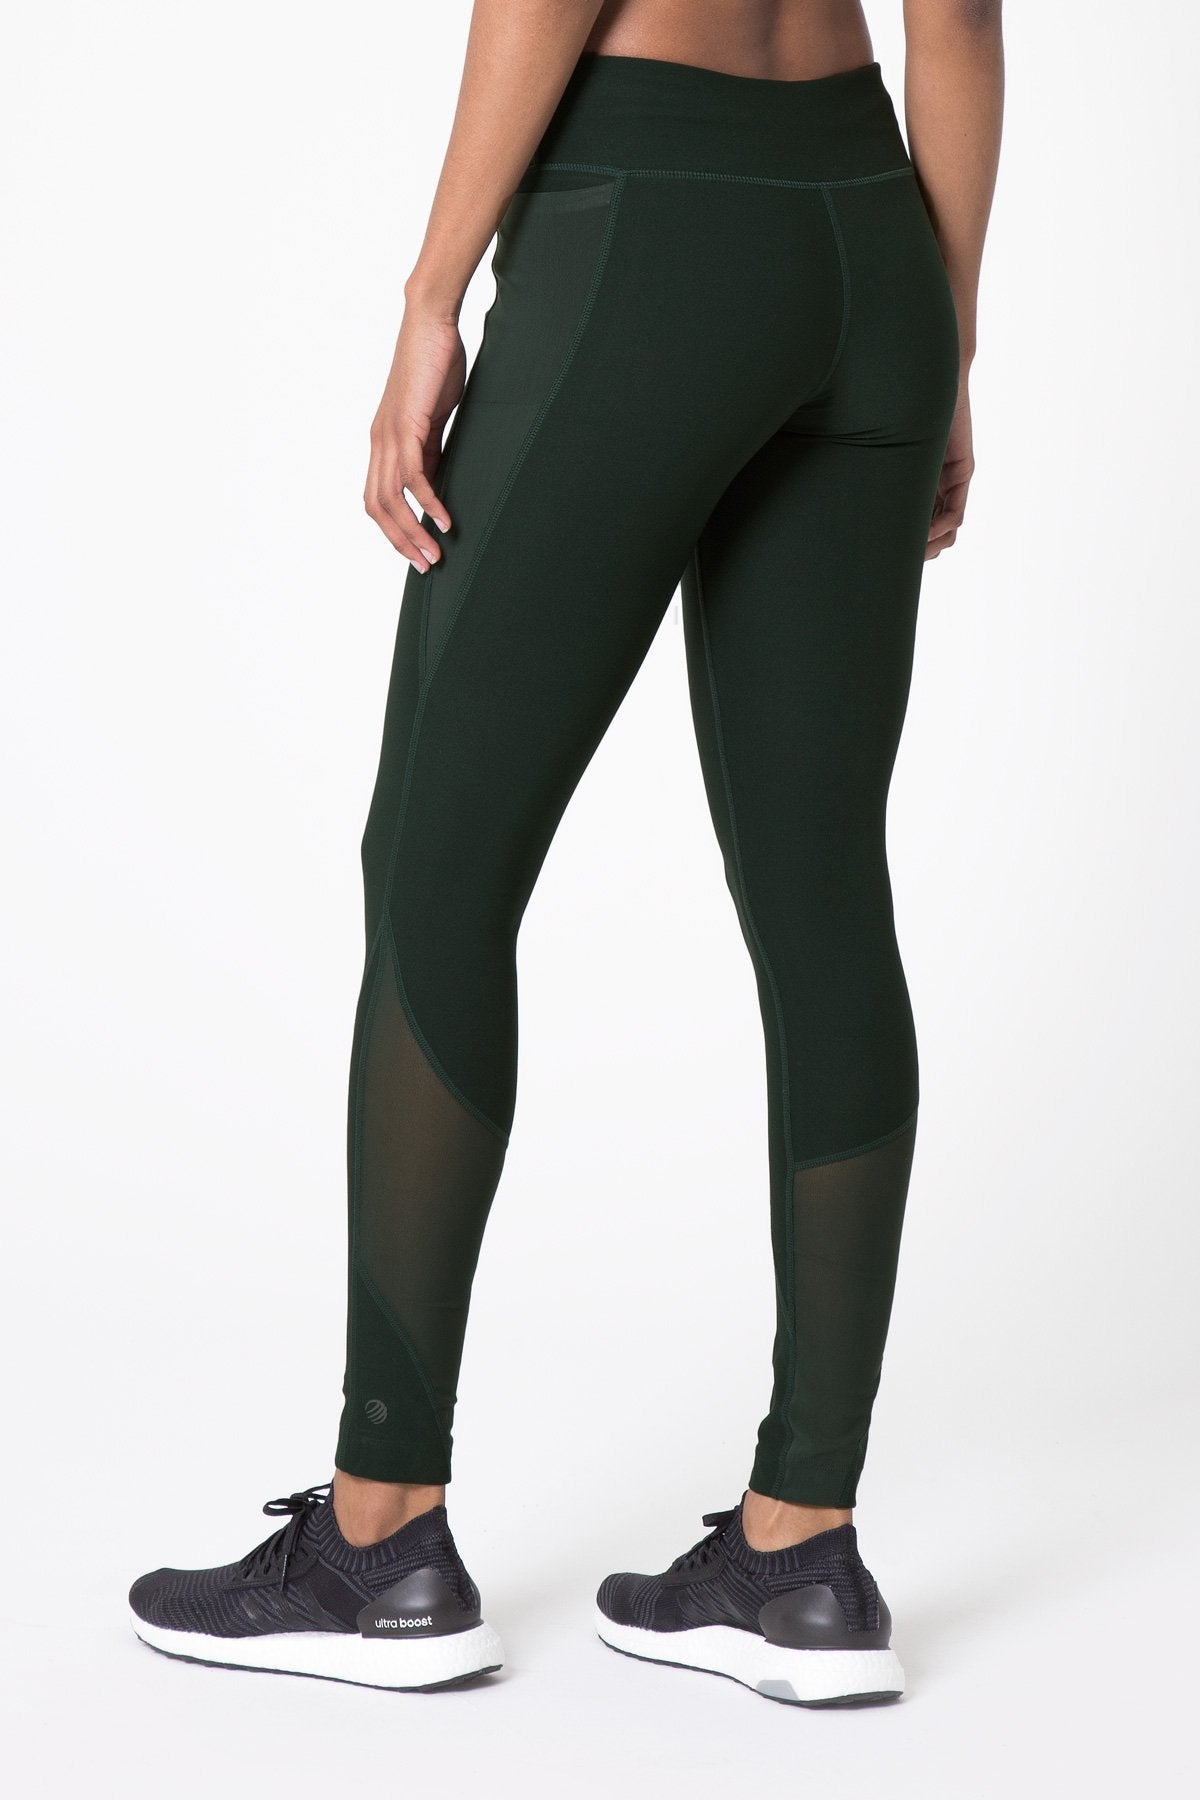 Snapklik.com : Women Yoga Pants Workout Running Leggings Black XS